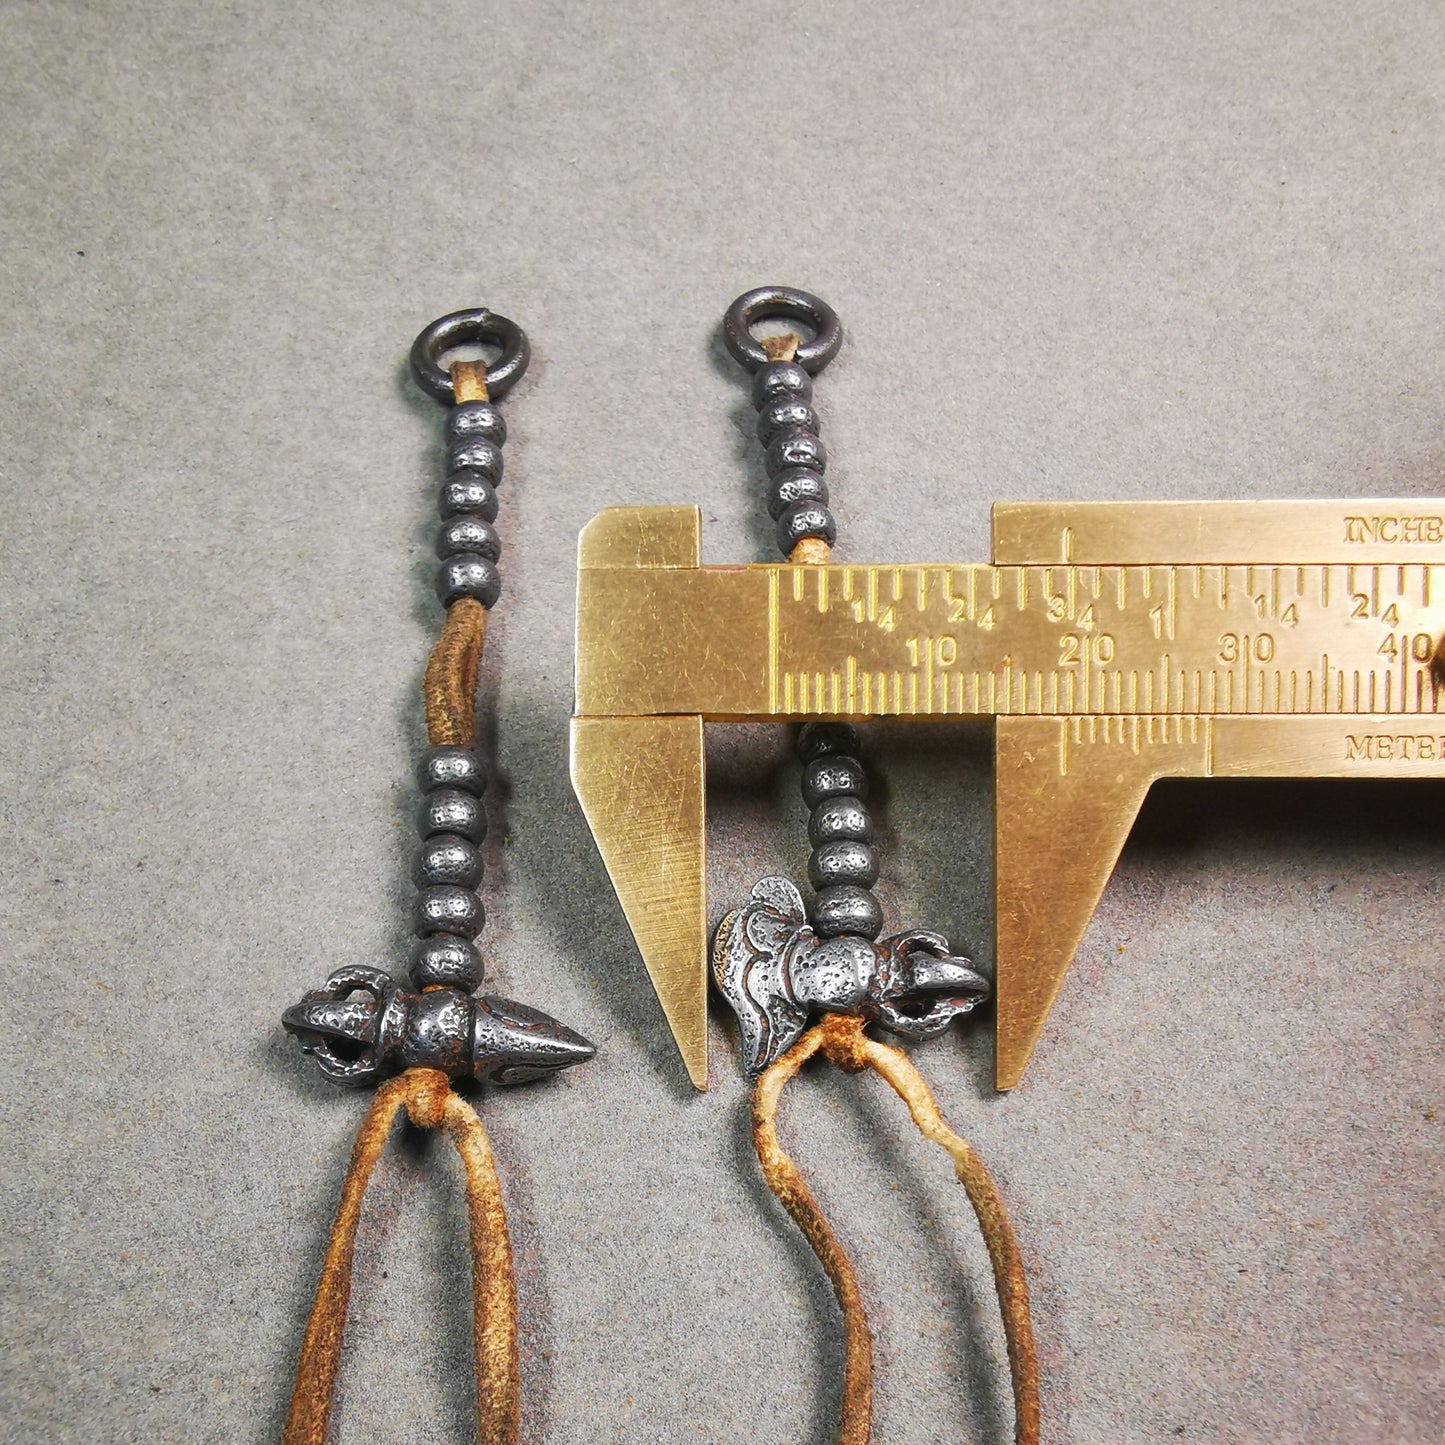 5mm Cold Iron Bead Counters with Kila and Kartika Pendant